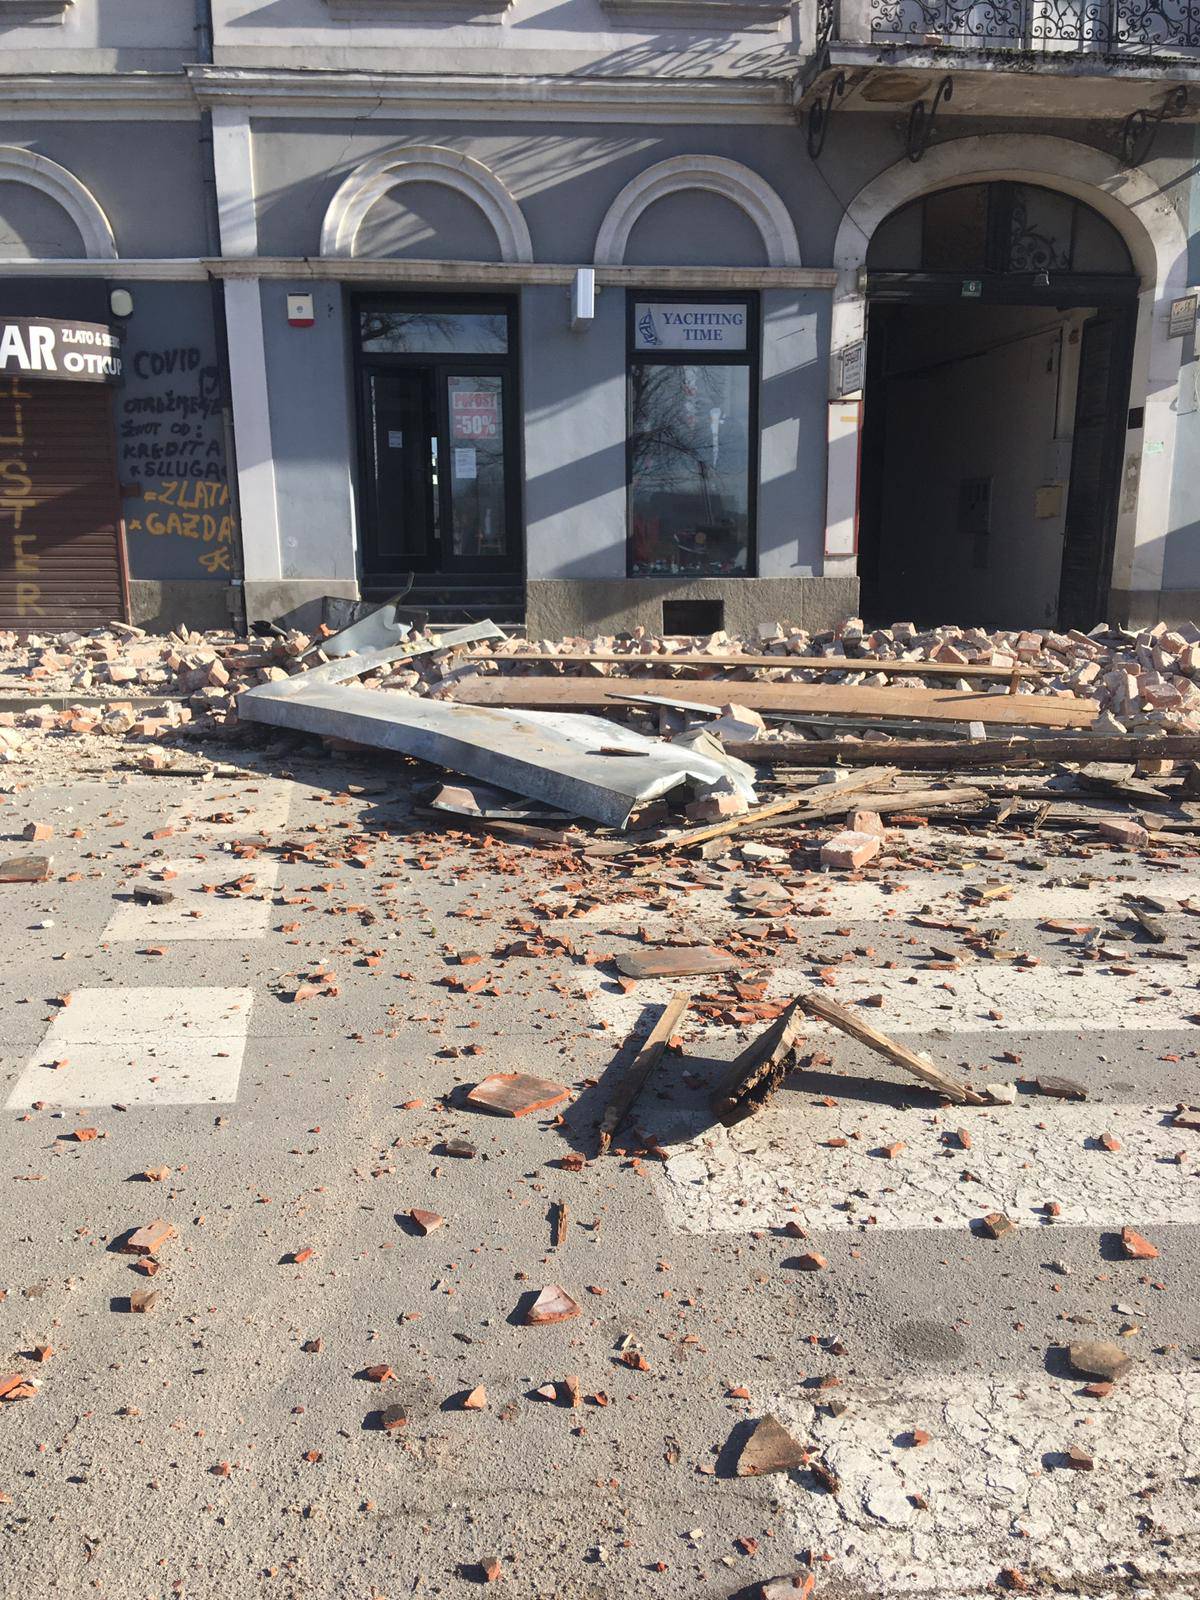 Pogledajte što je potres učinio od Siska, Petrinje, Zagreba...